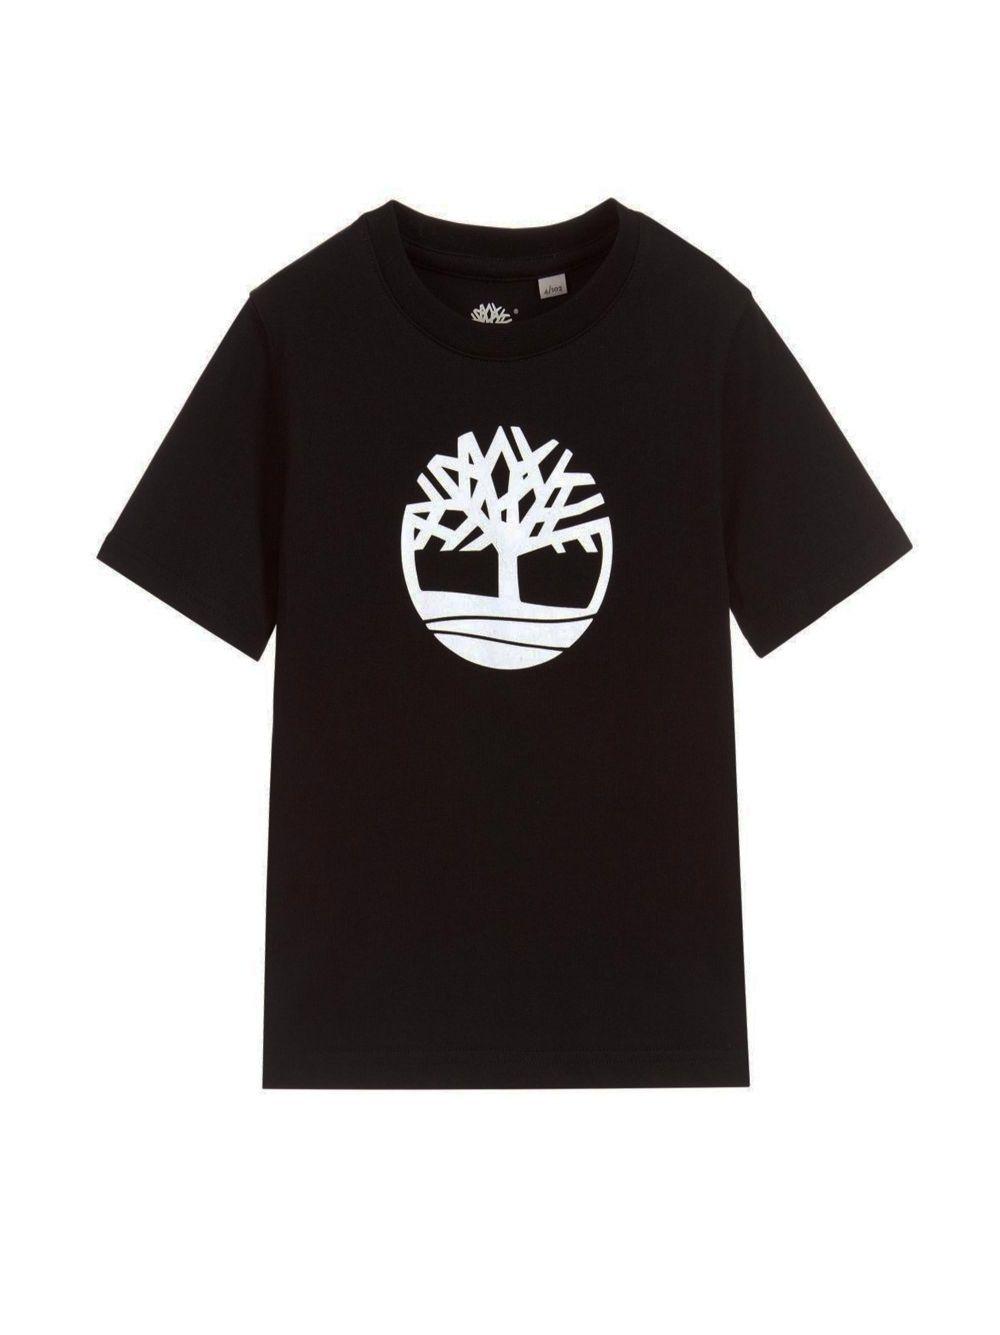 Black Timberland Logo - Timberland BOYS Crew Neck Black Logo T-Shirt | Designerwear